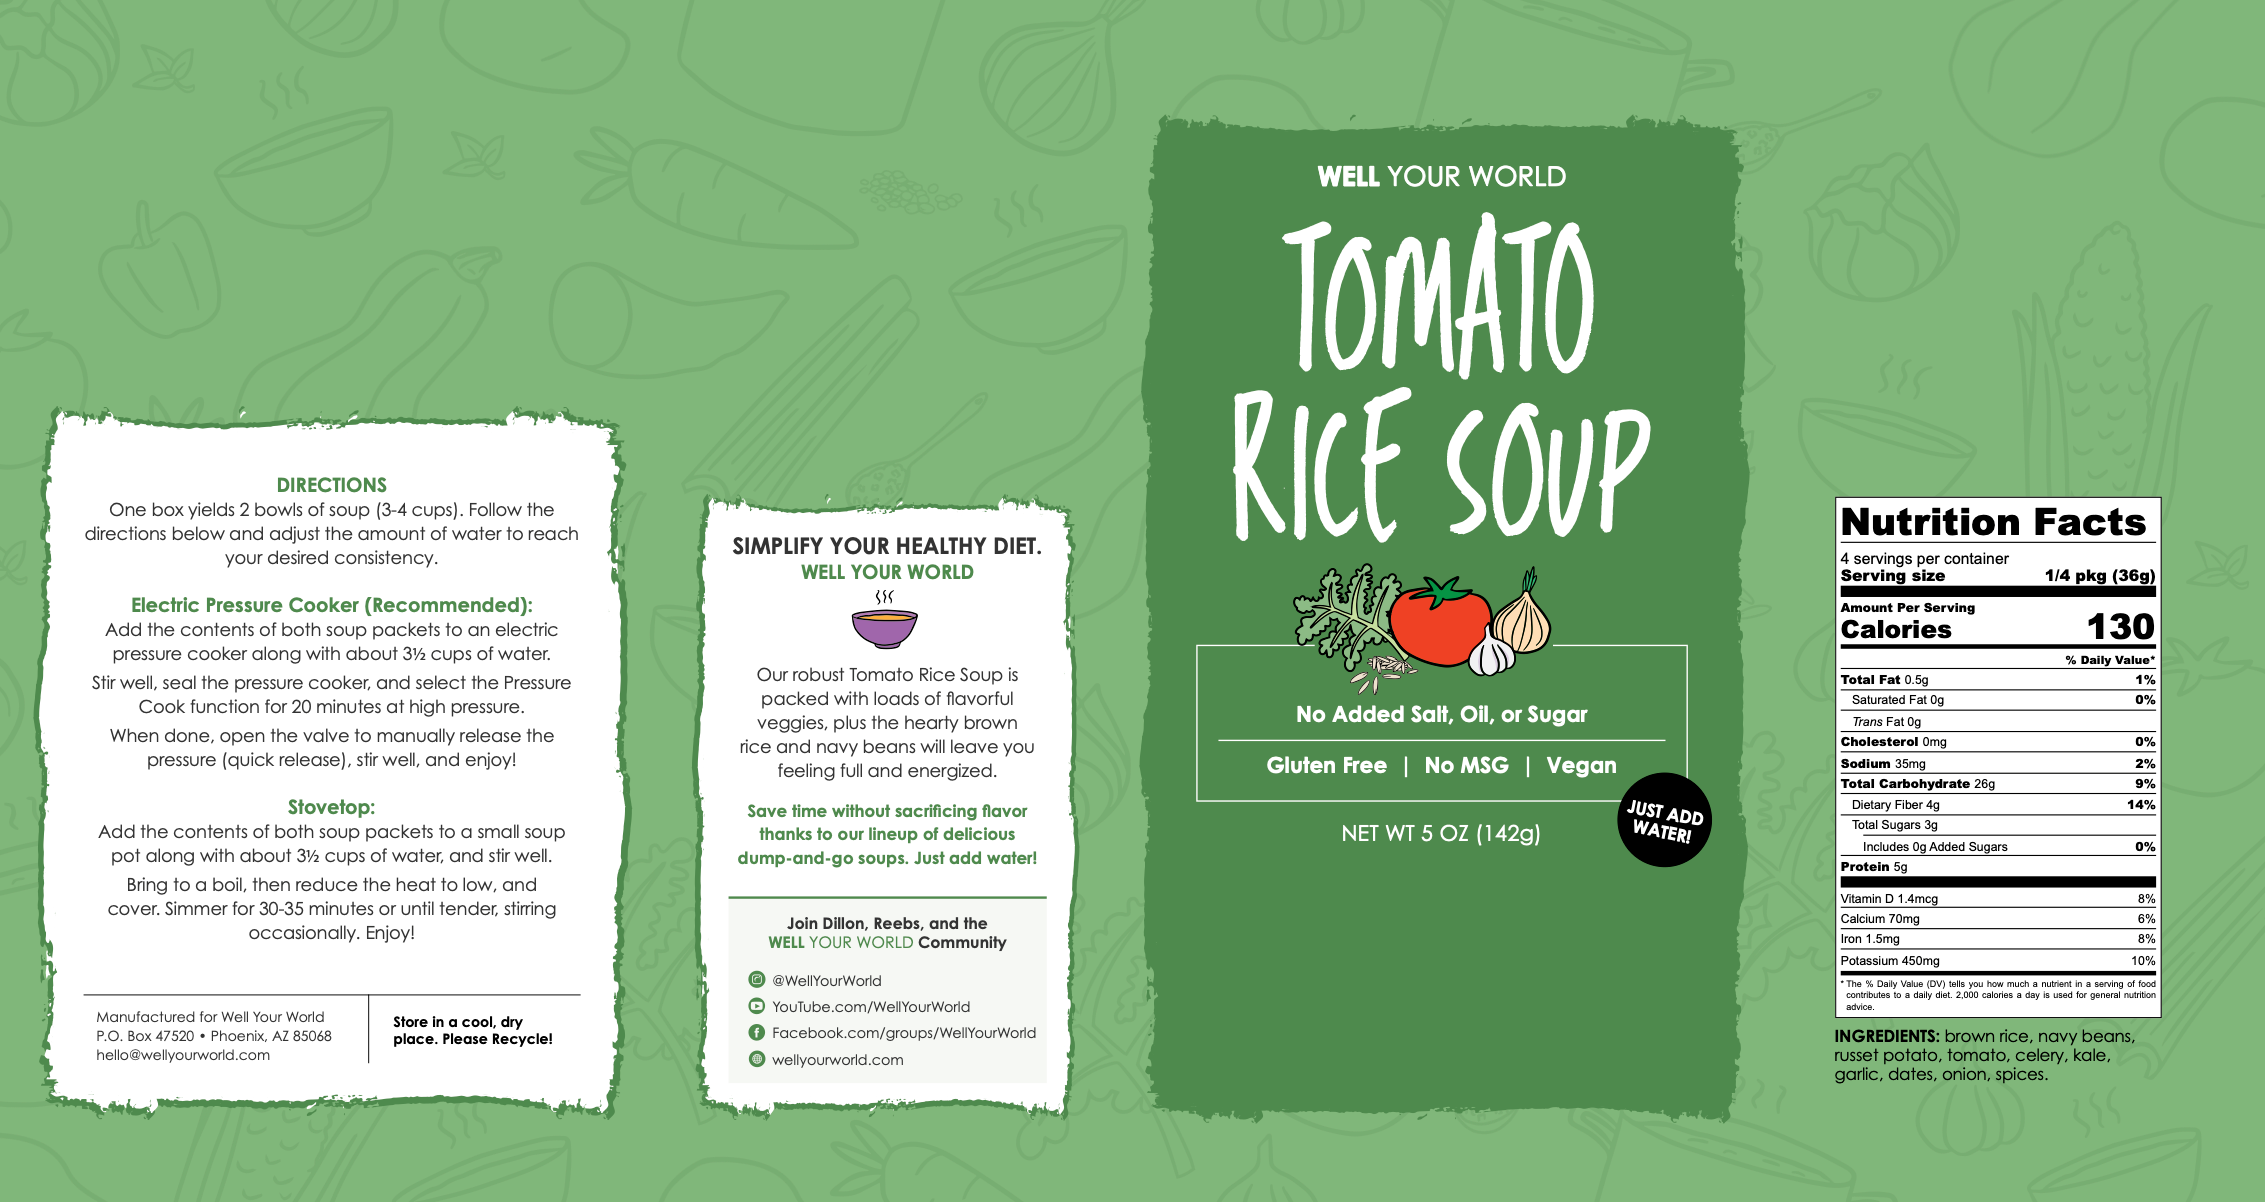 NEW Tomato Rice Soup